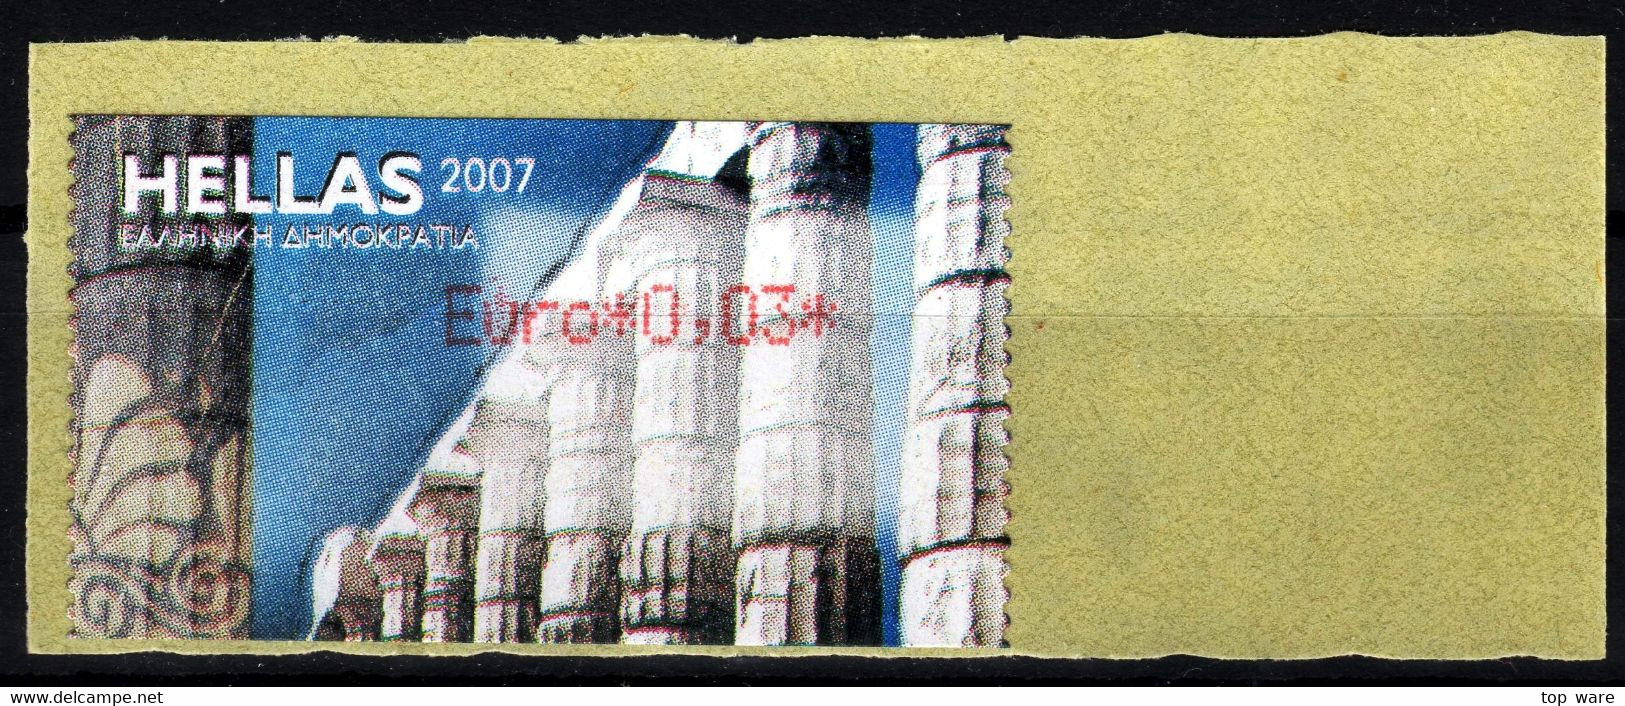 Greece Griechenland HELLAS ATM 23 Temple Colums * Red * Euro 0,03 MNH + Receipt * Frama Etiquetas Automatenmarken - Timbres De Distributeurs [ATM]